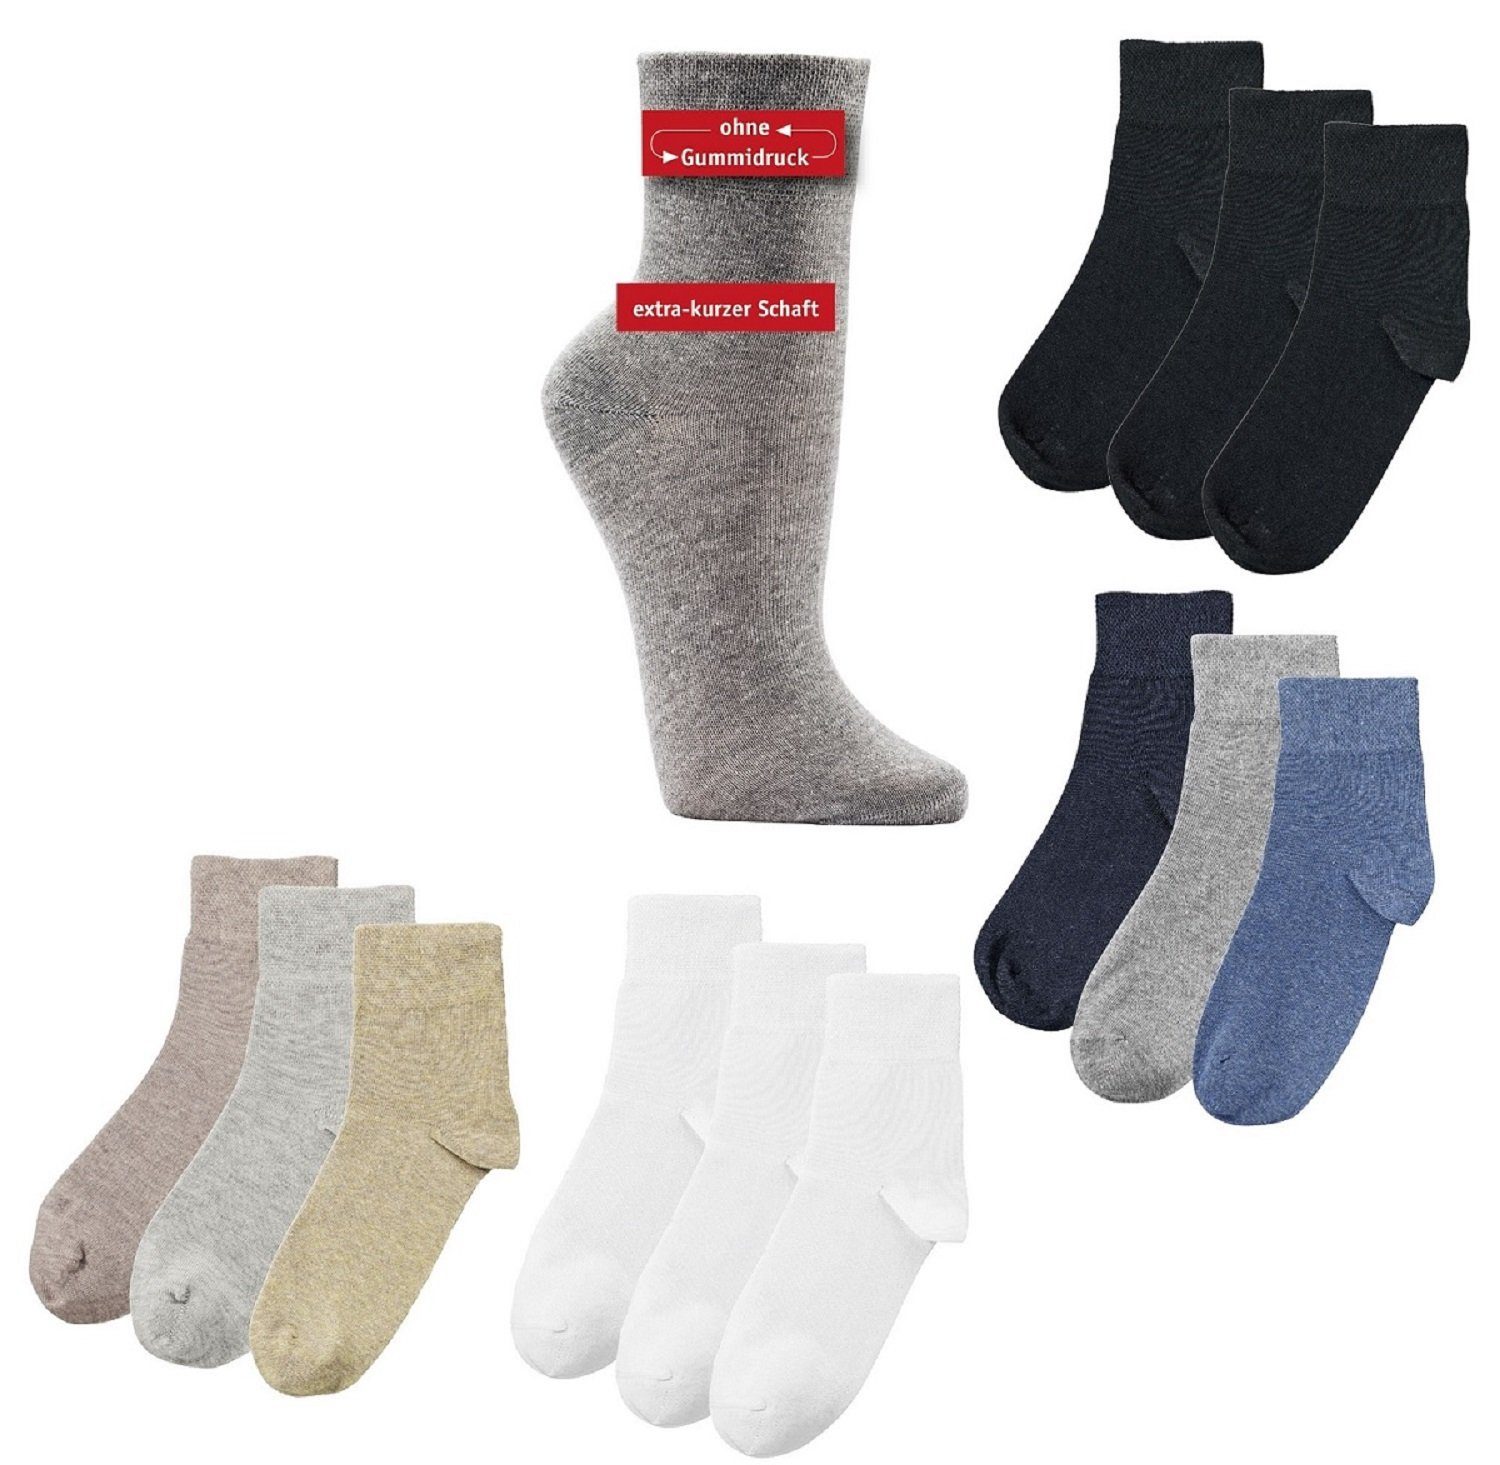 Socks 4 Fun Diabetikersocken Wellness Kurzschaft Baumwolle (3-Paar, 3 Paar) schwarz